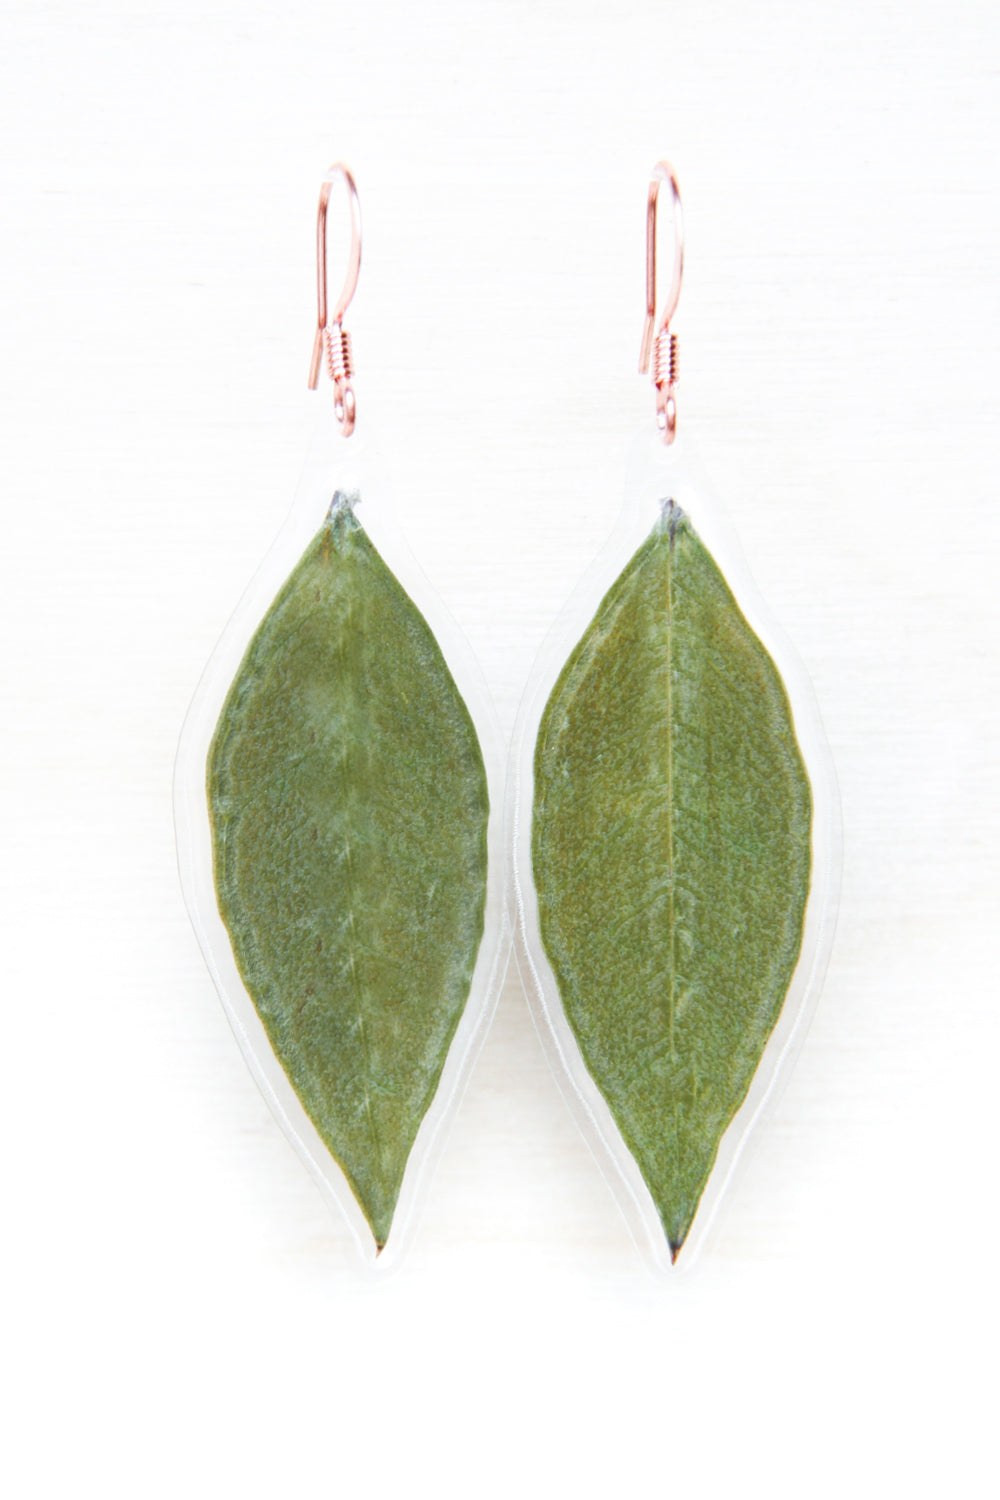 Green Myrtle Pressed Leaf Drop Earrings